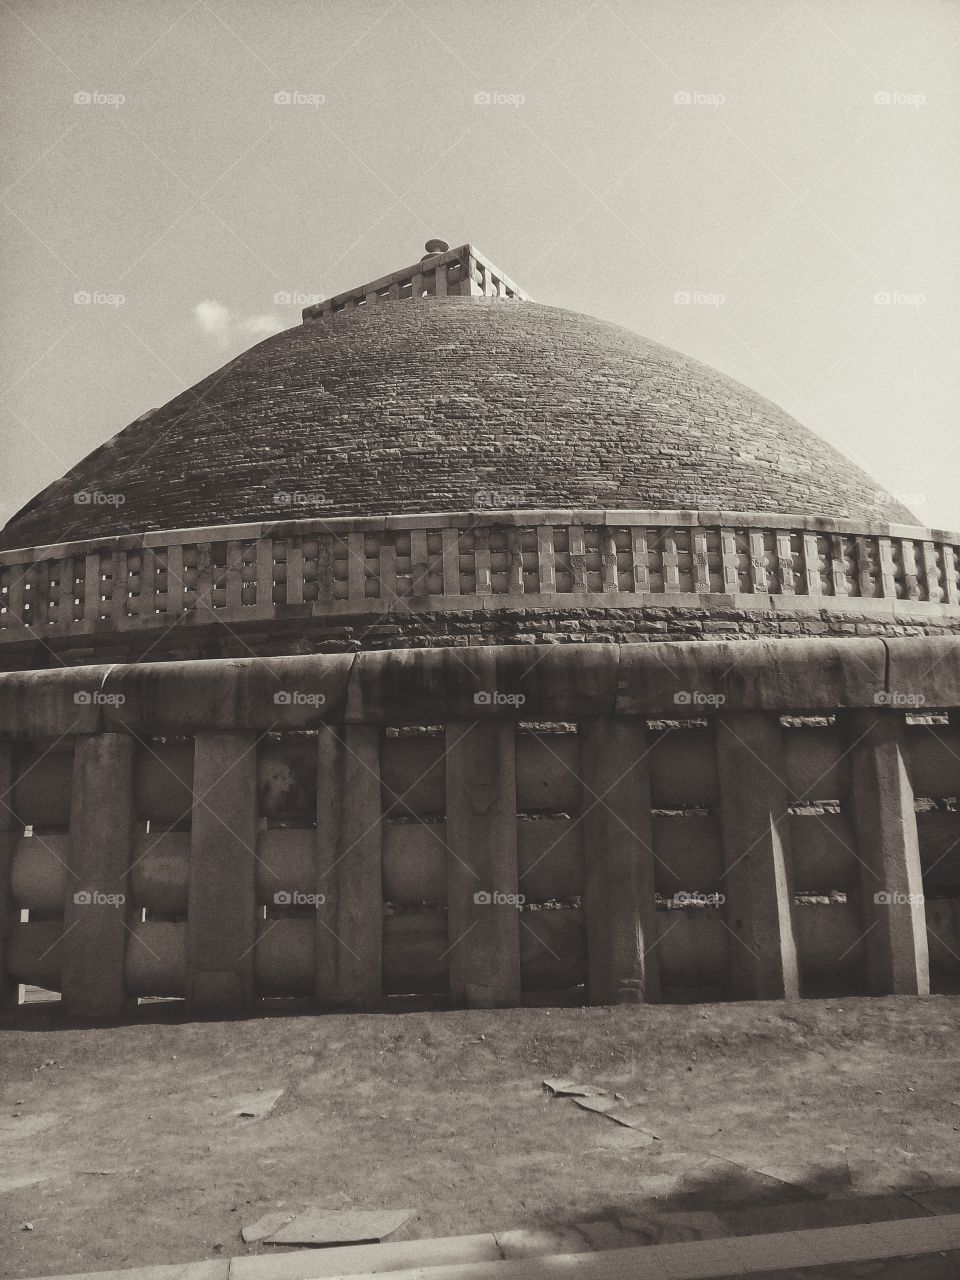 Ancient Buddhist architecture at Sanchi called stupa.